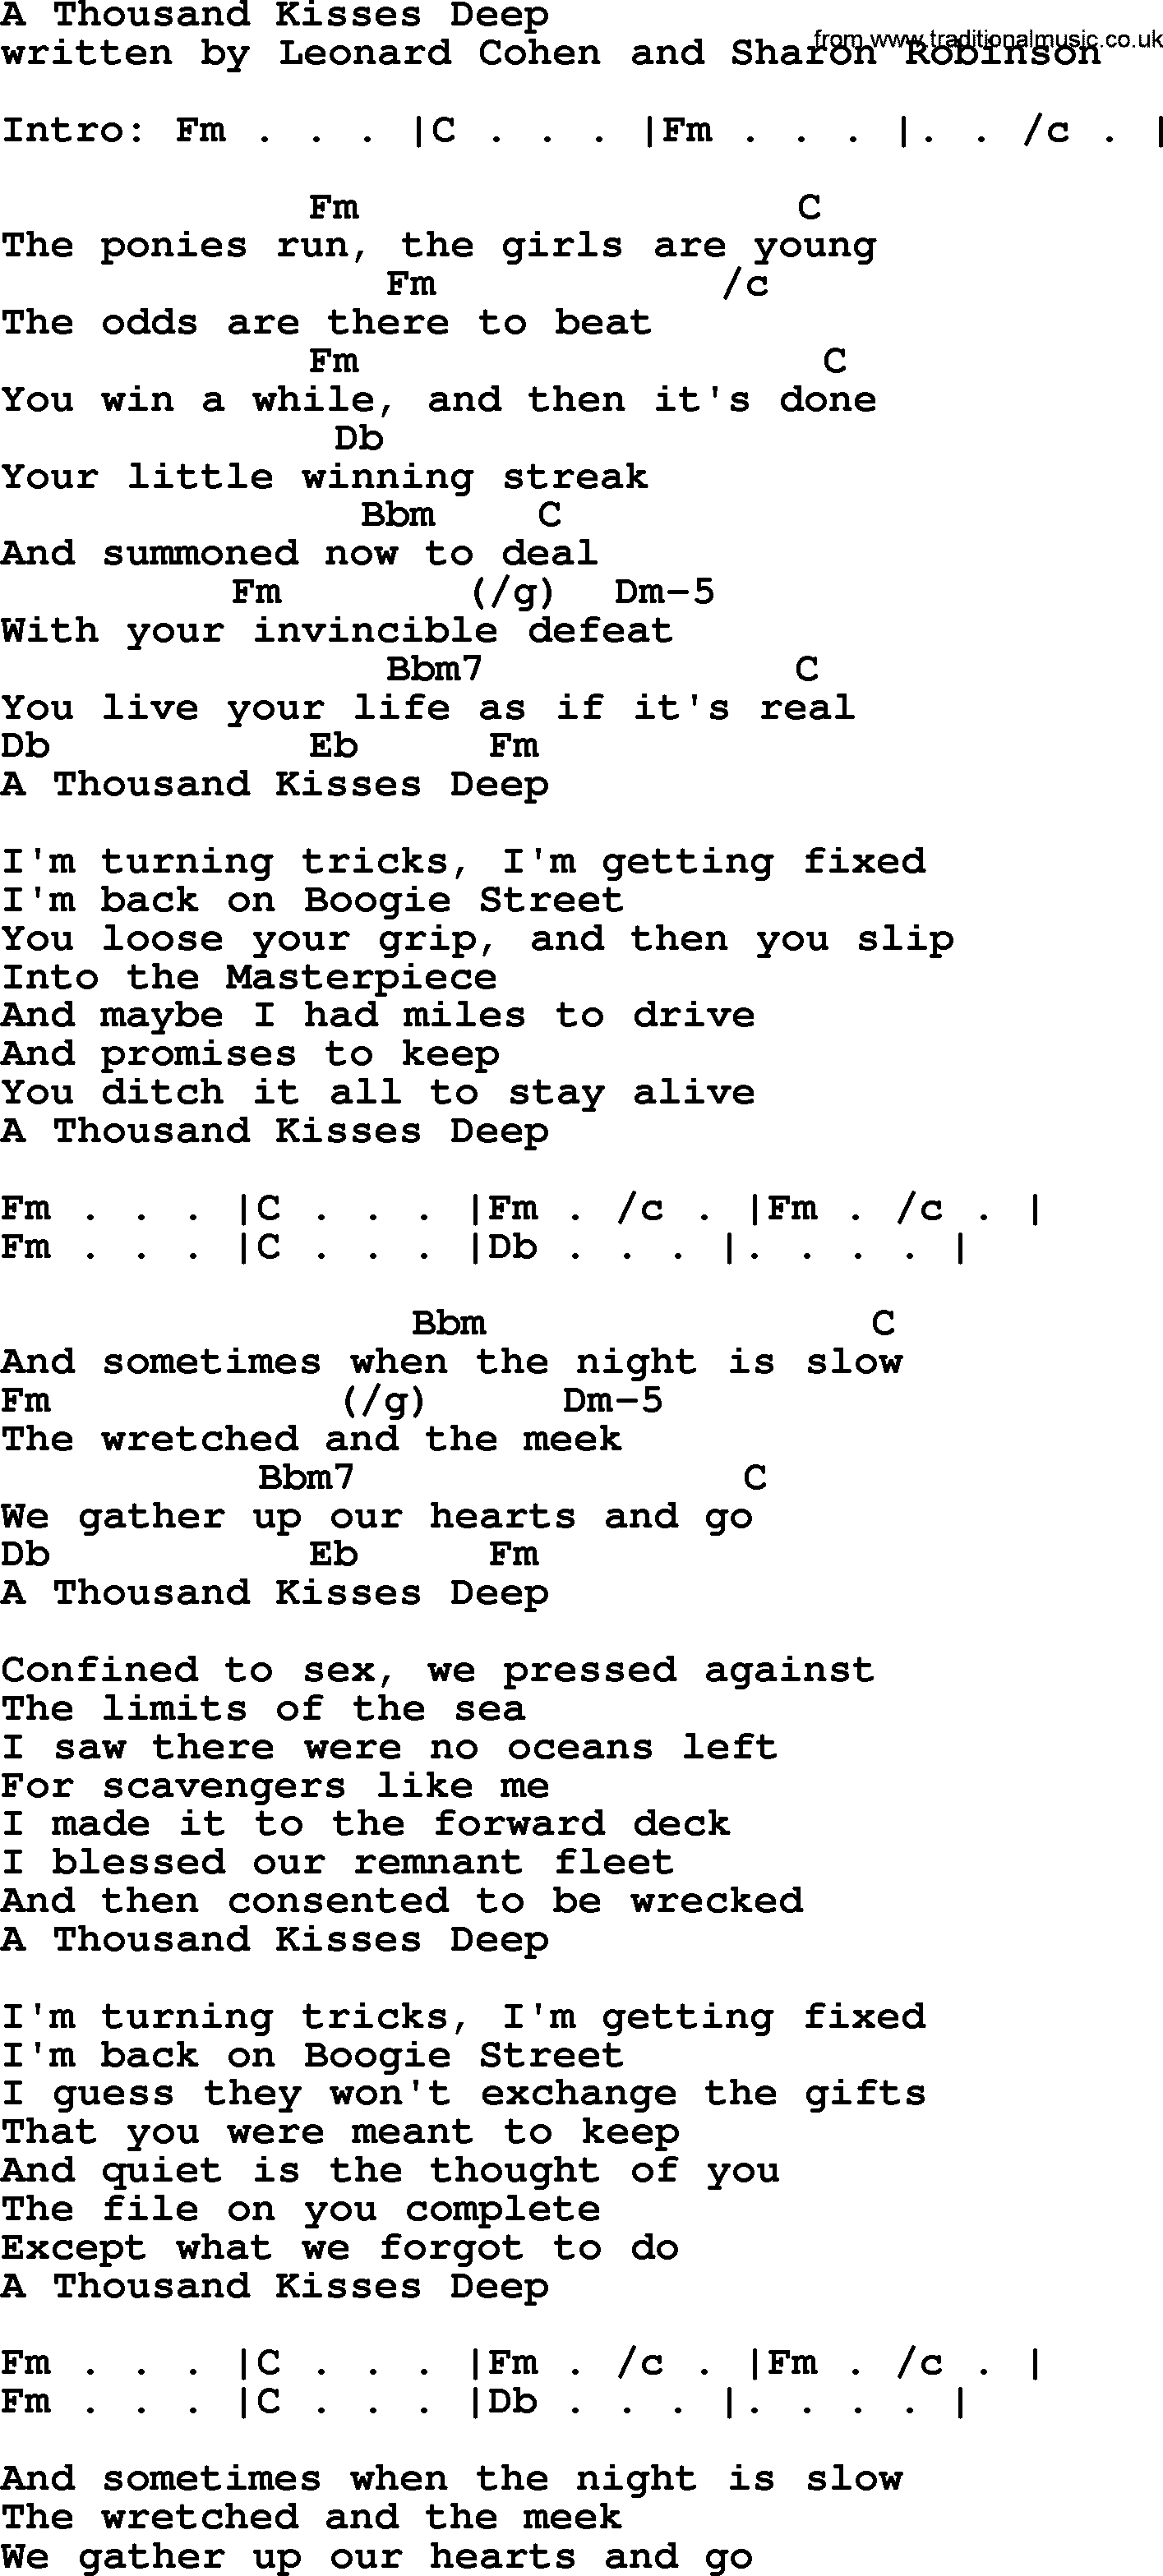 Leonard Cohen song A Thousand Kisses Deep, lyrics and chords